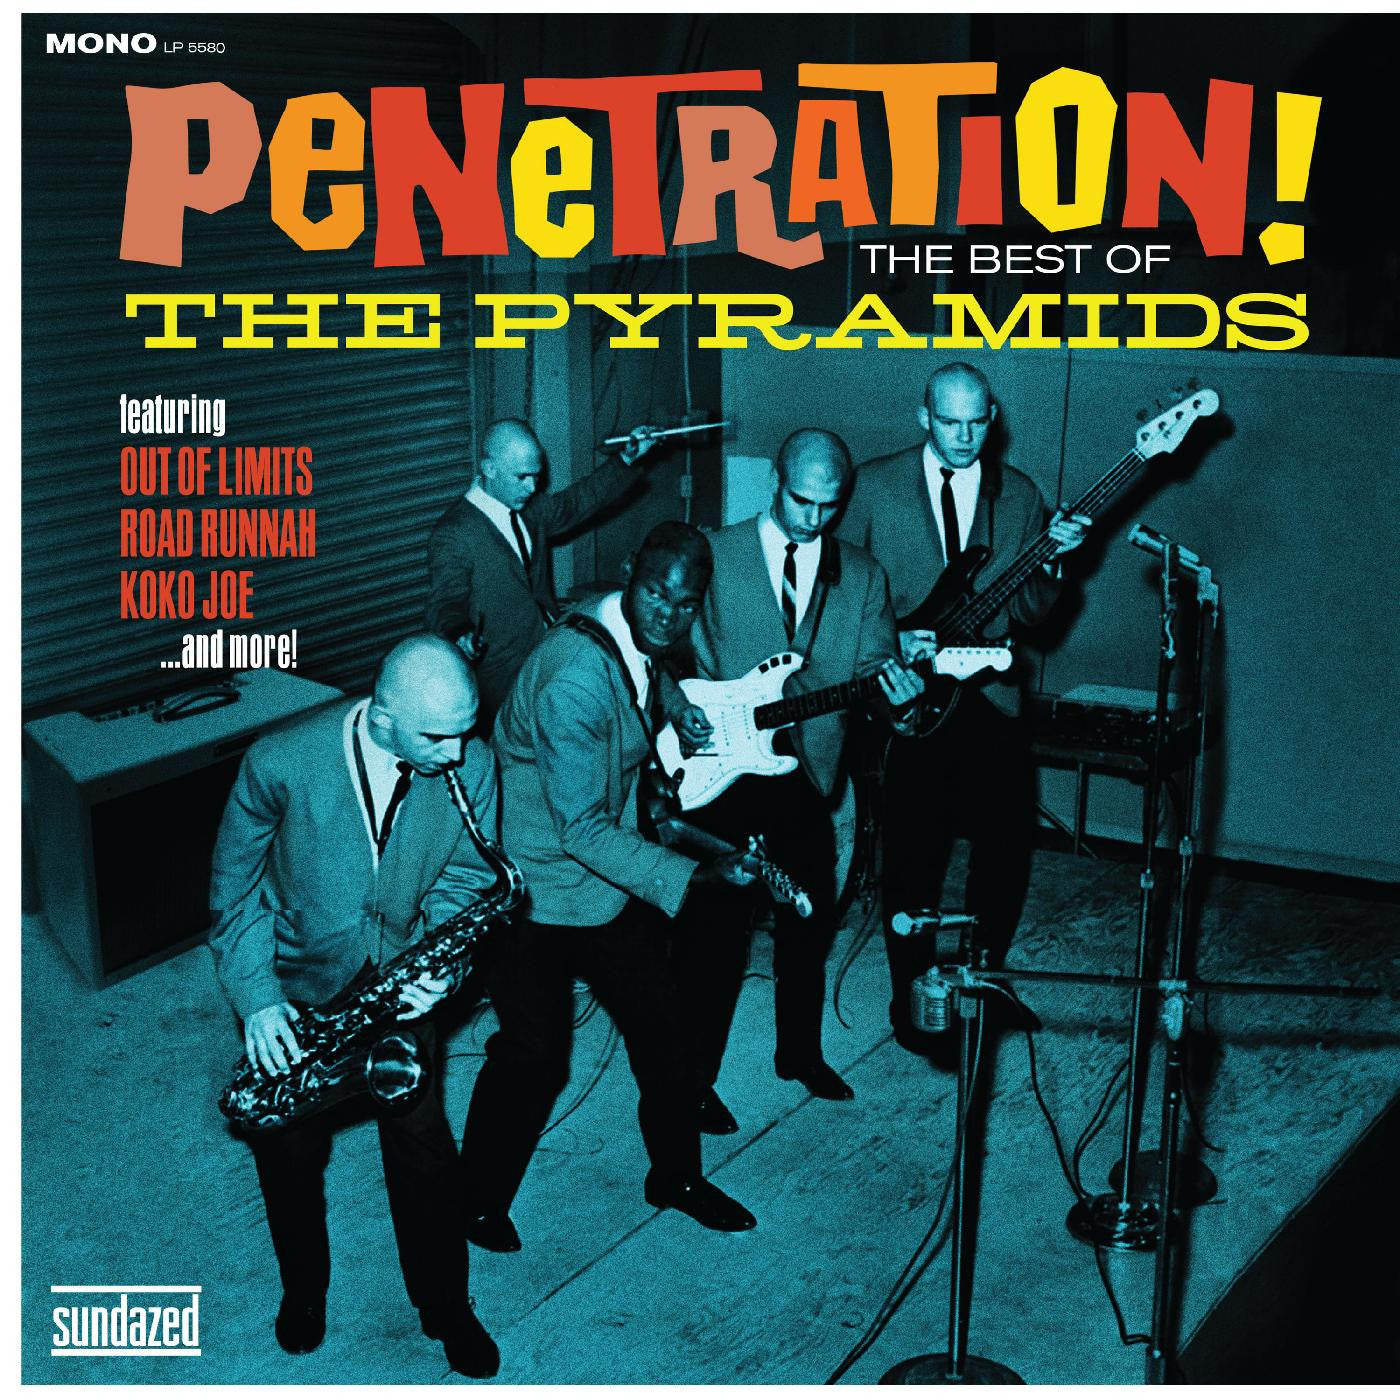 Pyramids - Penetration: The Best of the Pyramids (Vinyl LP)